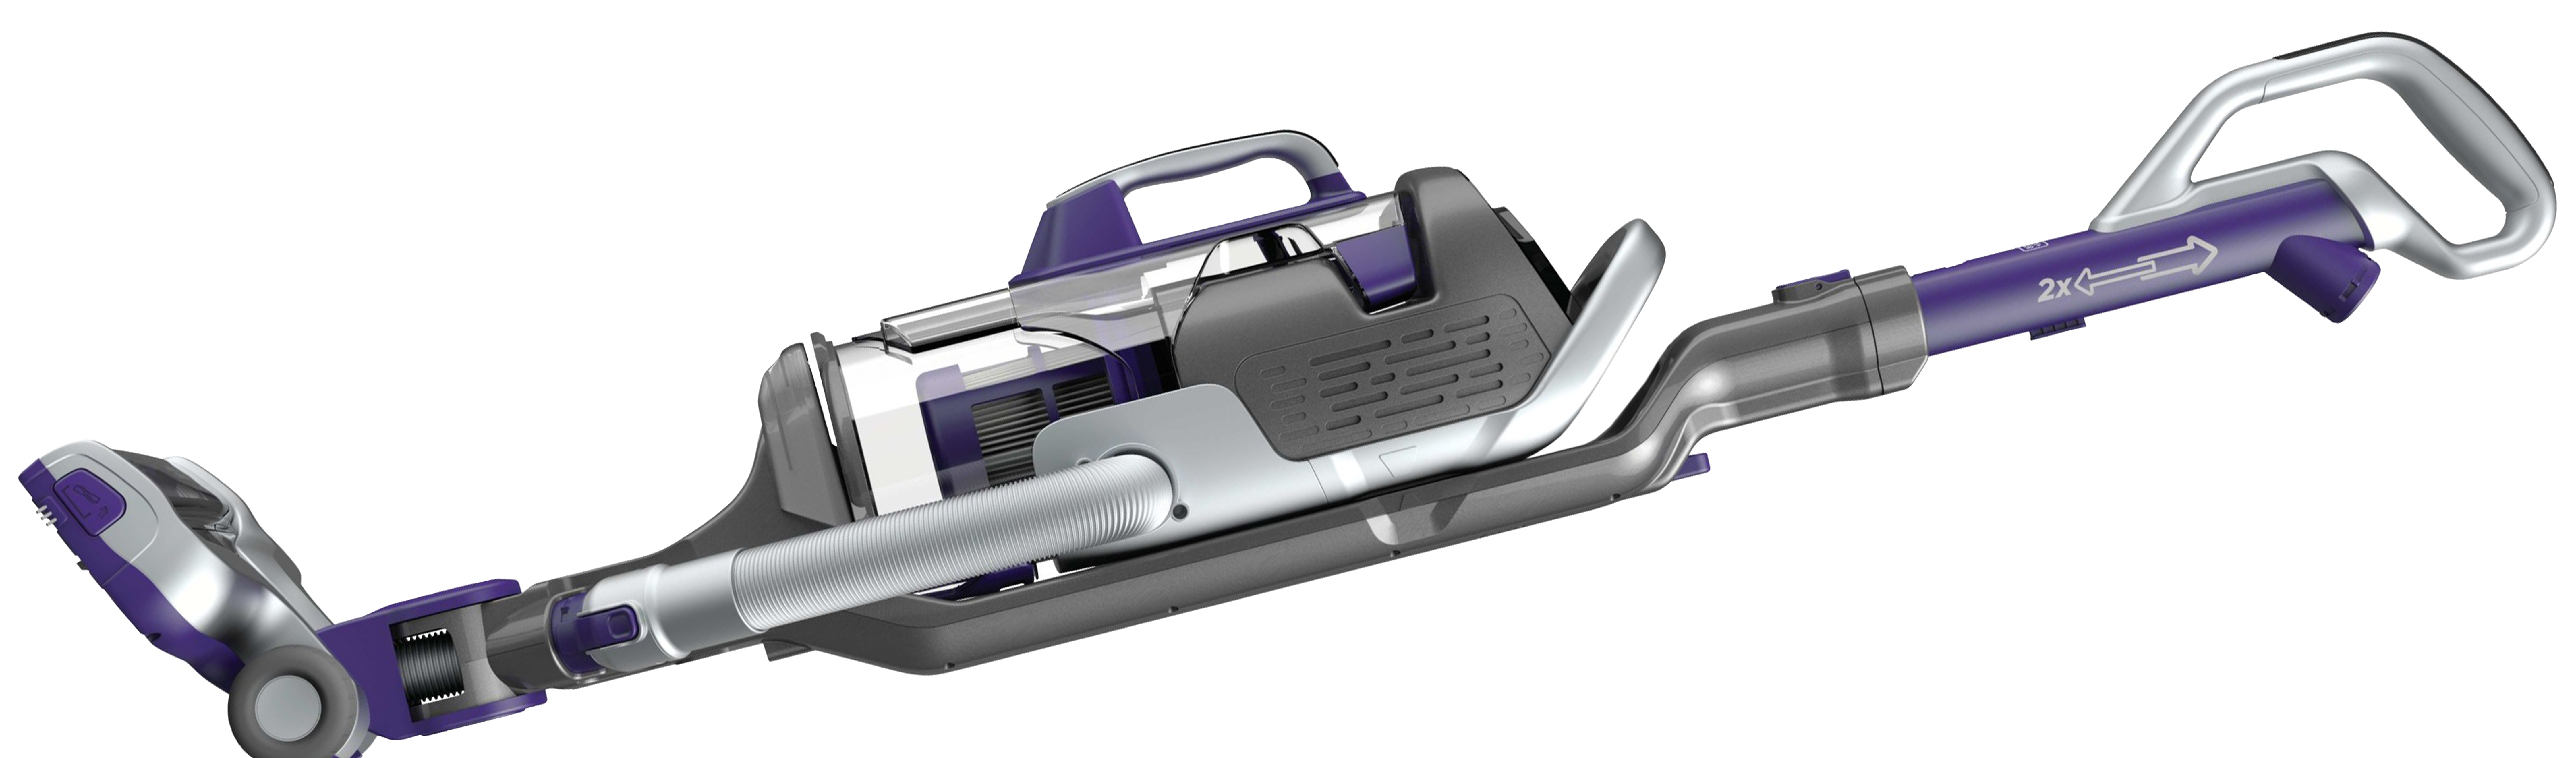  BLACK+DECKER Power Series Pro Pet Cordless Stick Vacuum  Cleaner, 2-in-1, Purple (HCUA525JP) : Industrial & Scientific